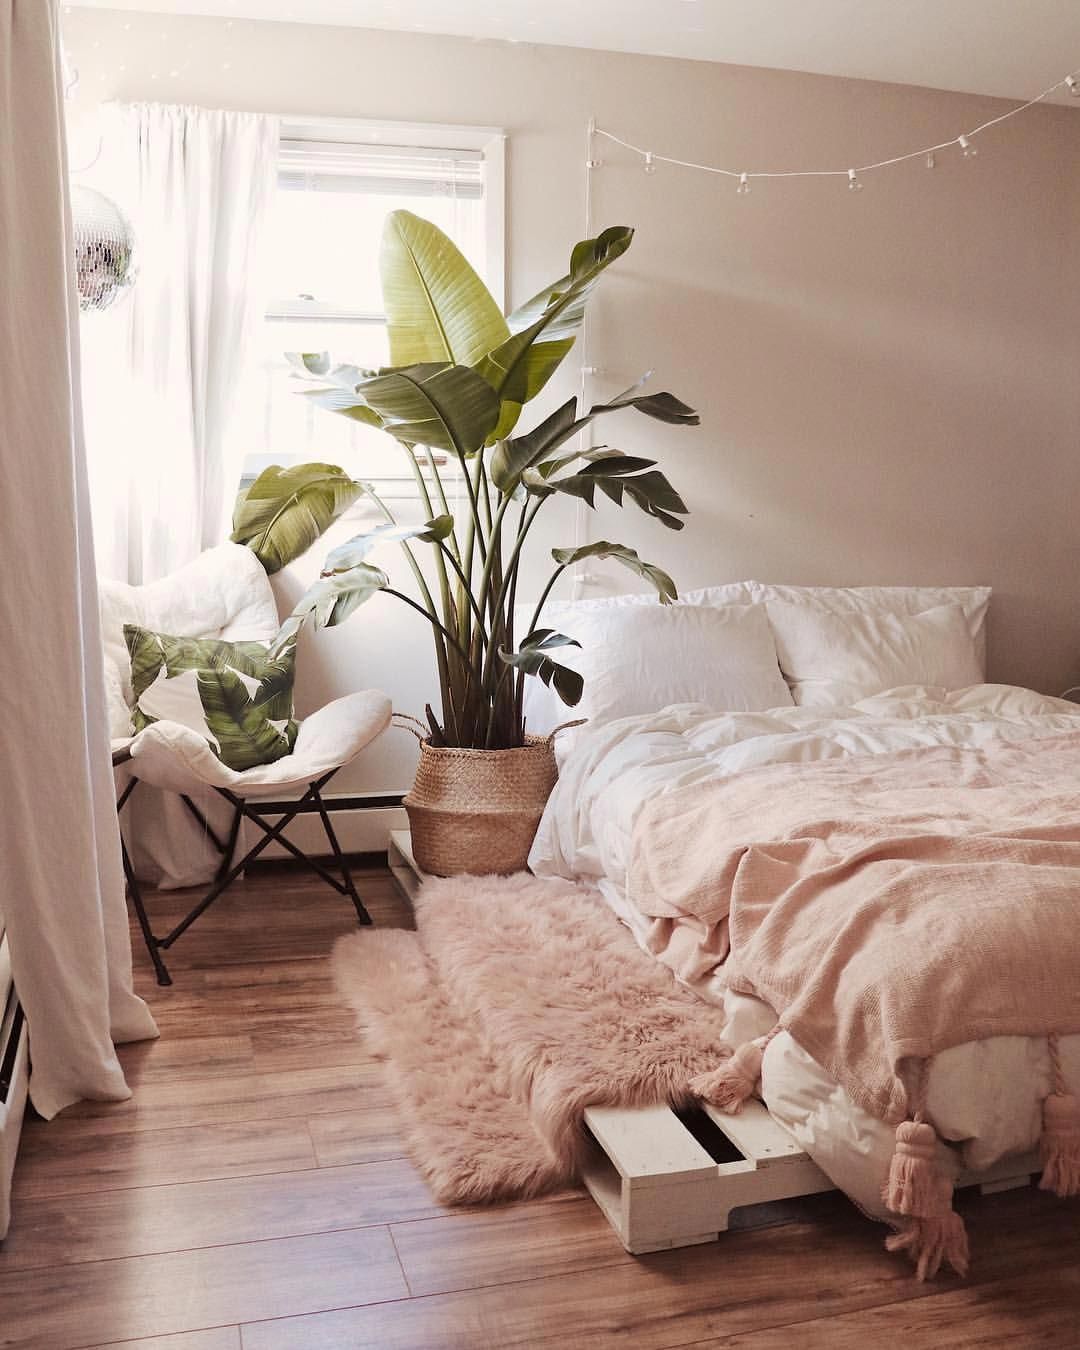 Vaso de plantas ao lado da cama.